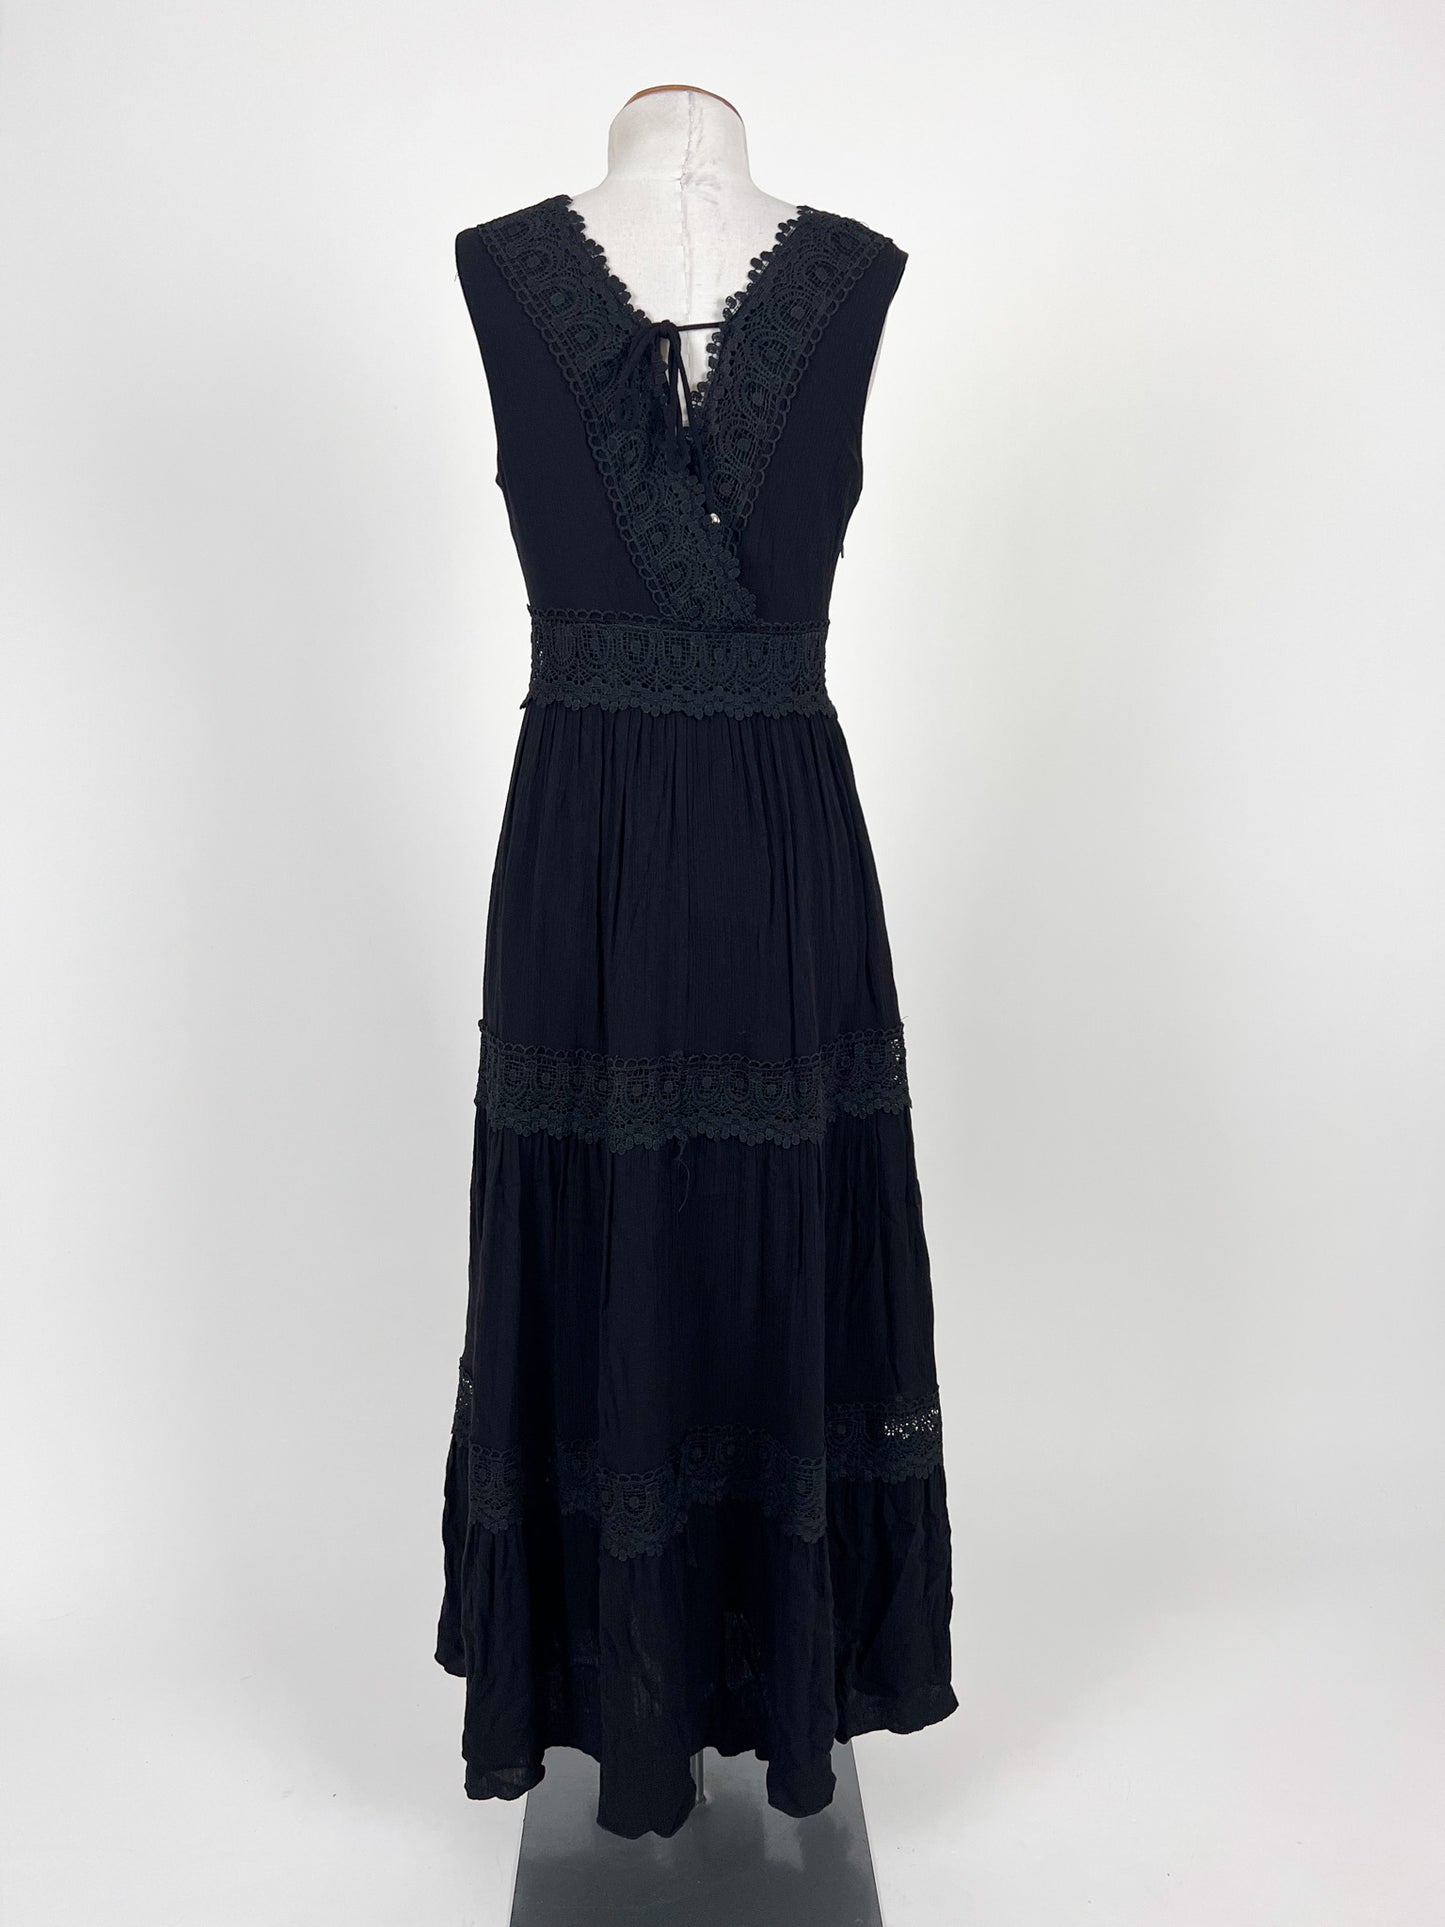 Liz Jordan | Black Formal Dress | Size 8